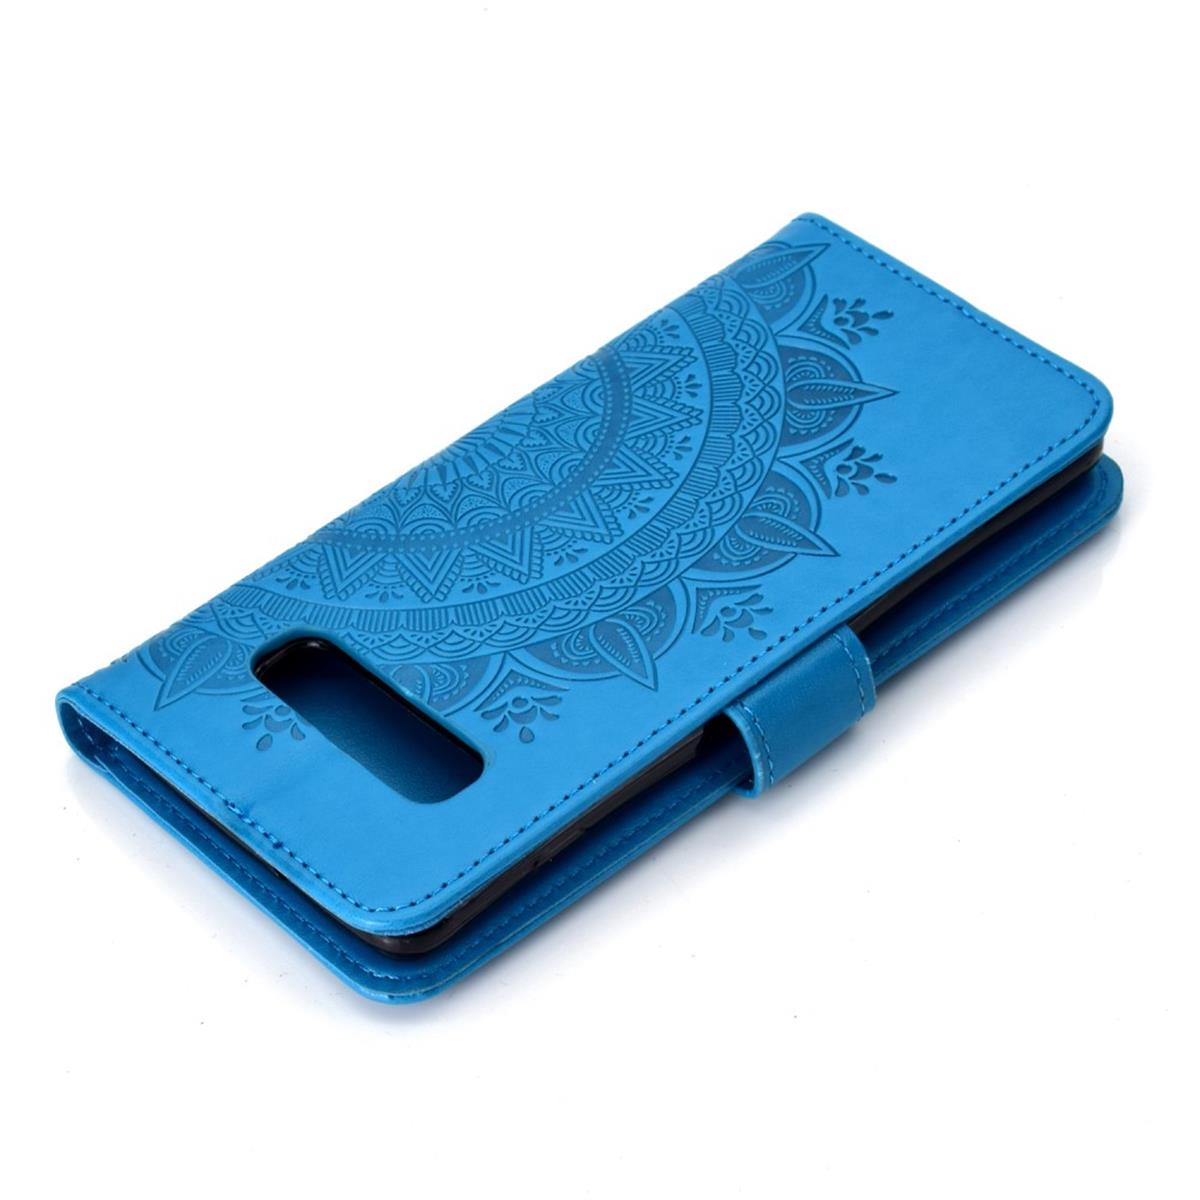 Hülle für Samsung Galaxy S10+ (Plus) Handyhülle Case Schutzhülle Mandala Blau